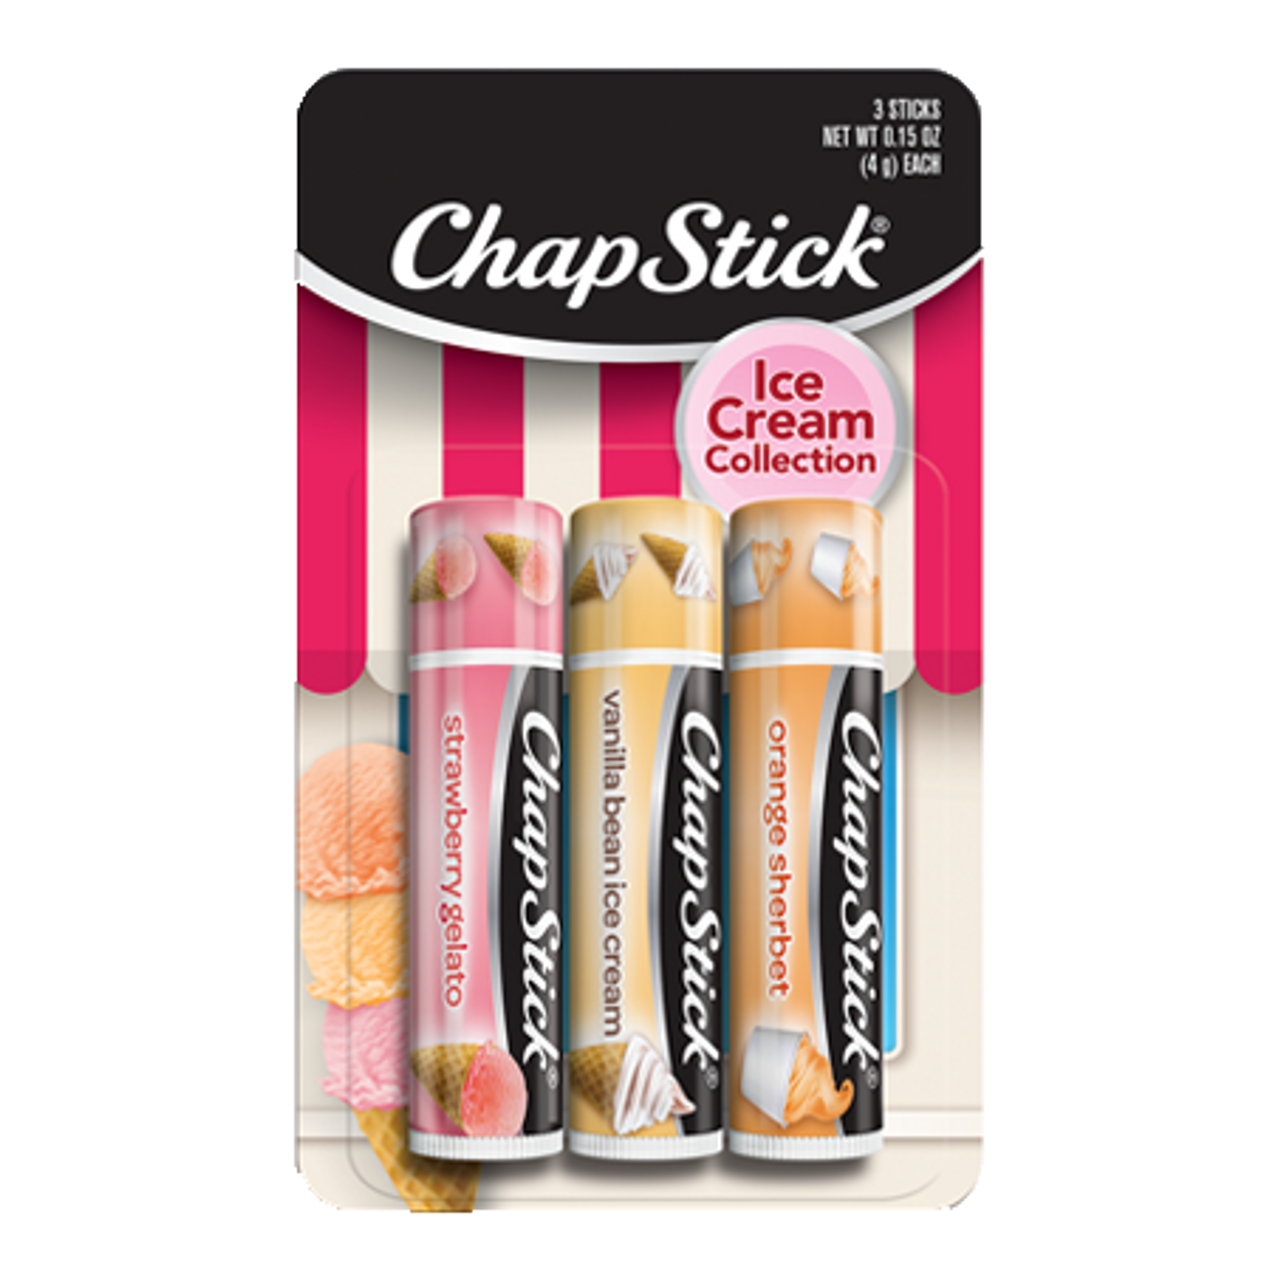 ChapStick® Ice Cream Collection three pack with Strawberry Gelato, Vanilla Bean Ice Cream and Orange Sherbet flavors.